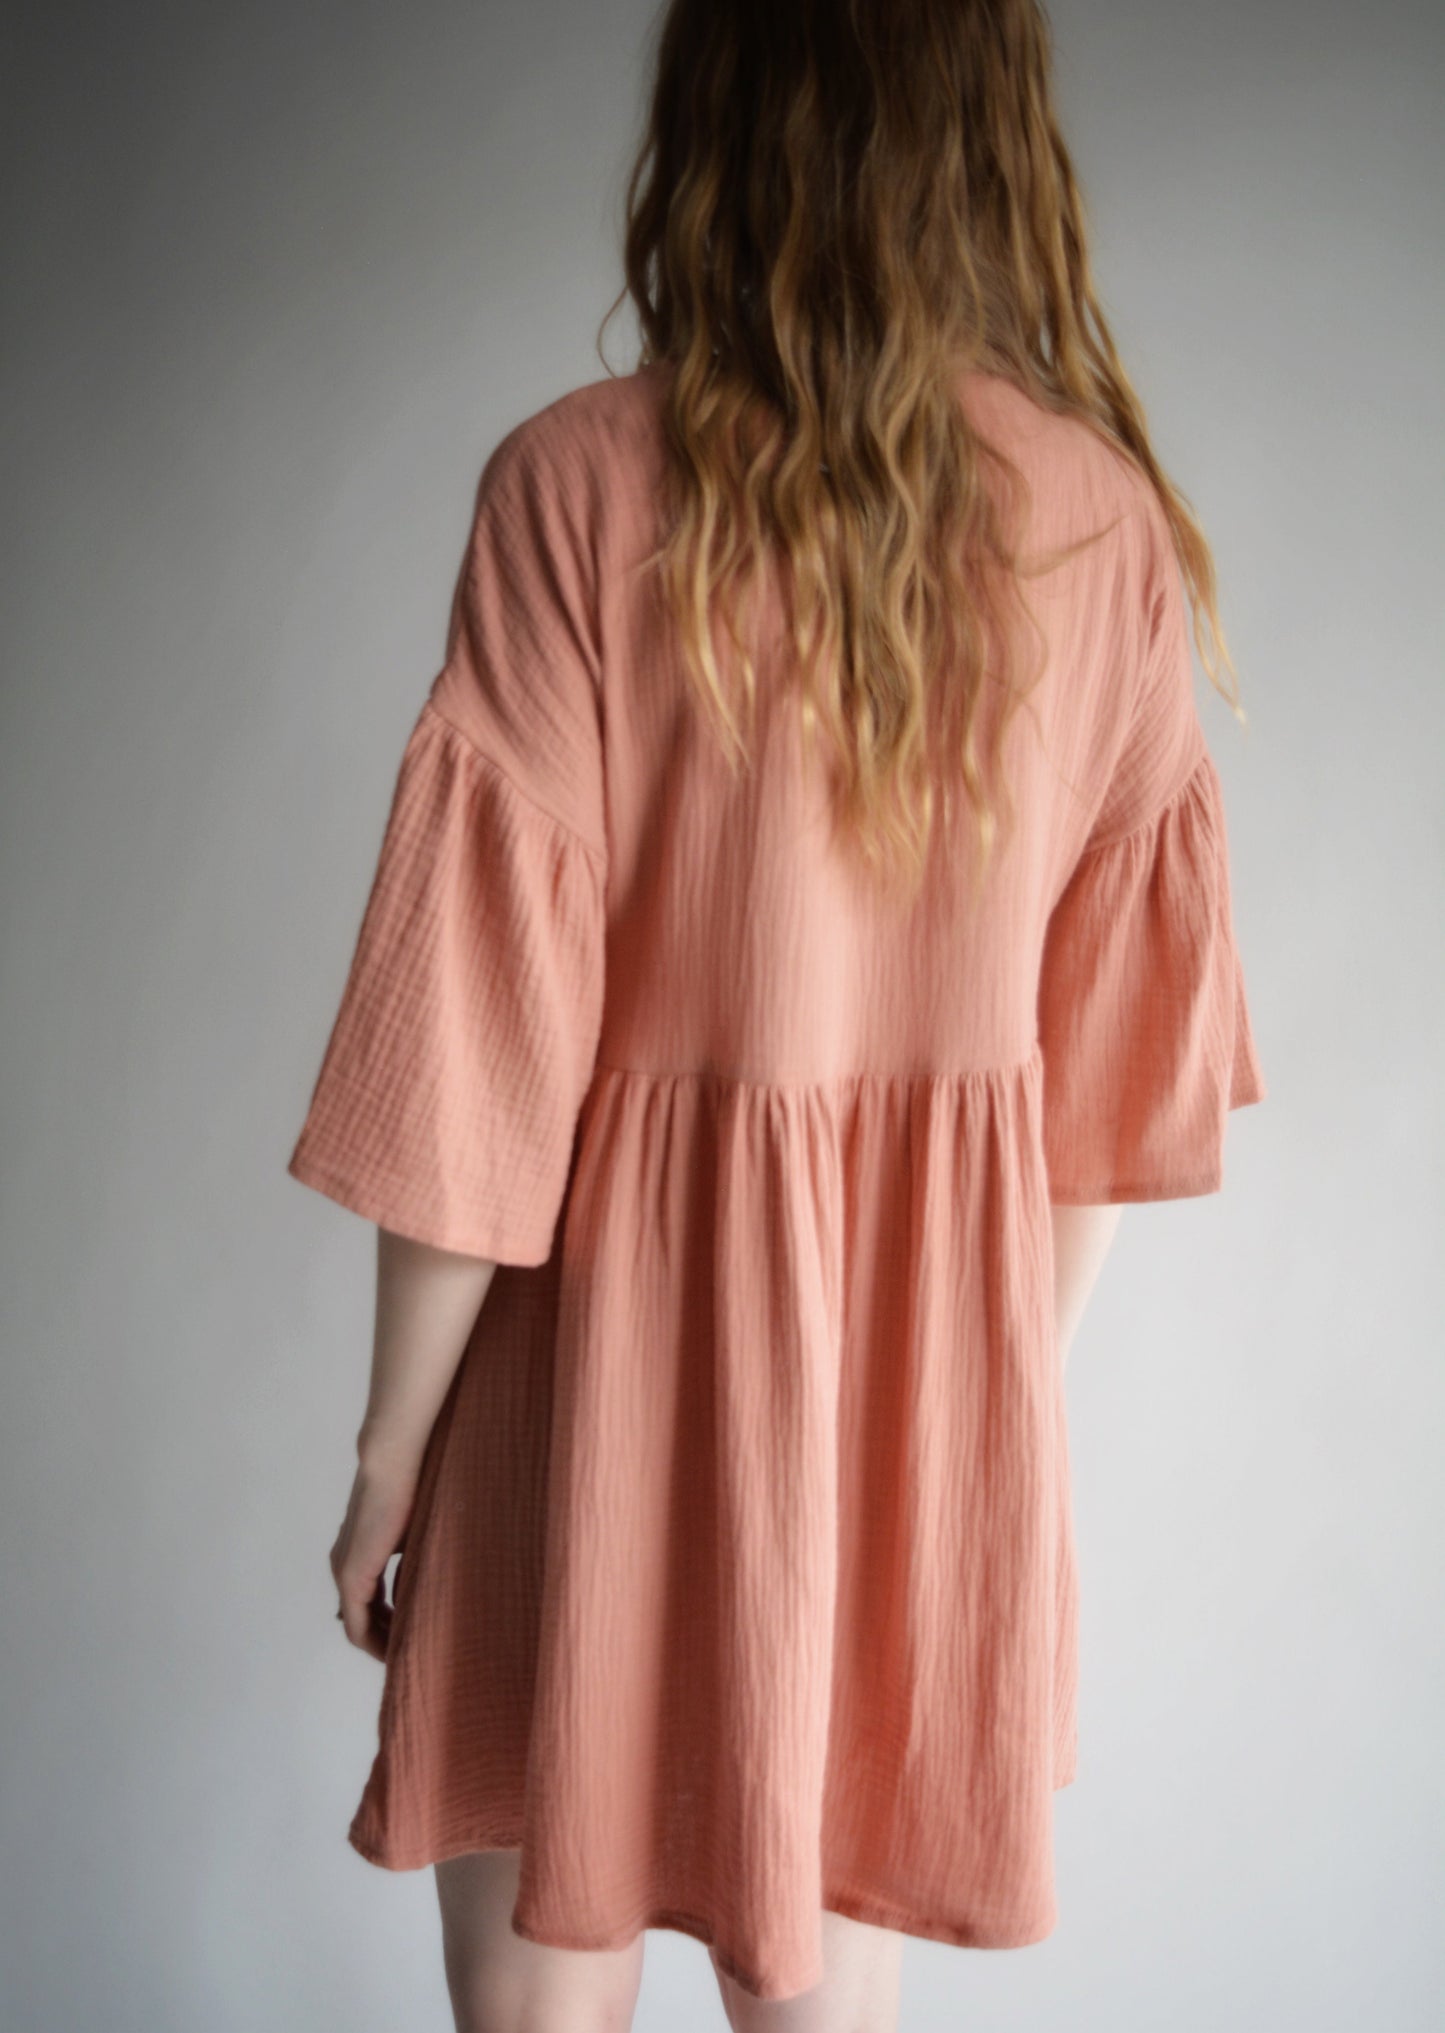 Muslin Dress in Soft Pink